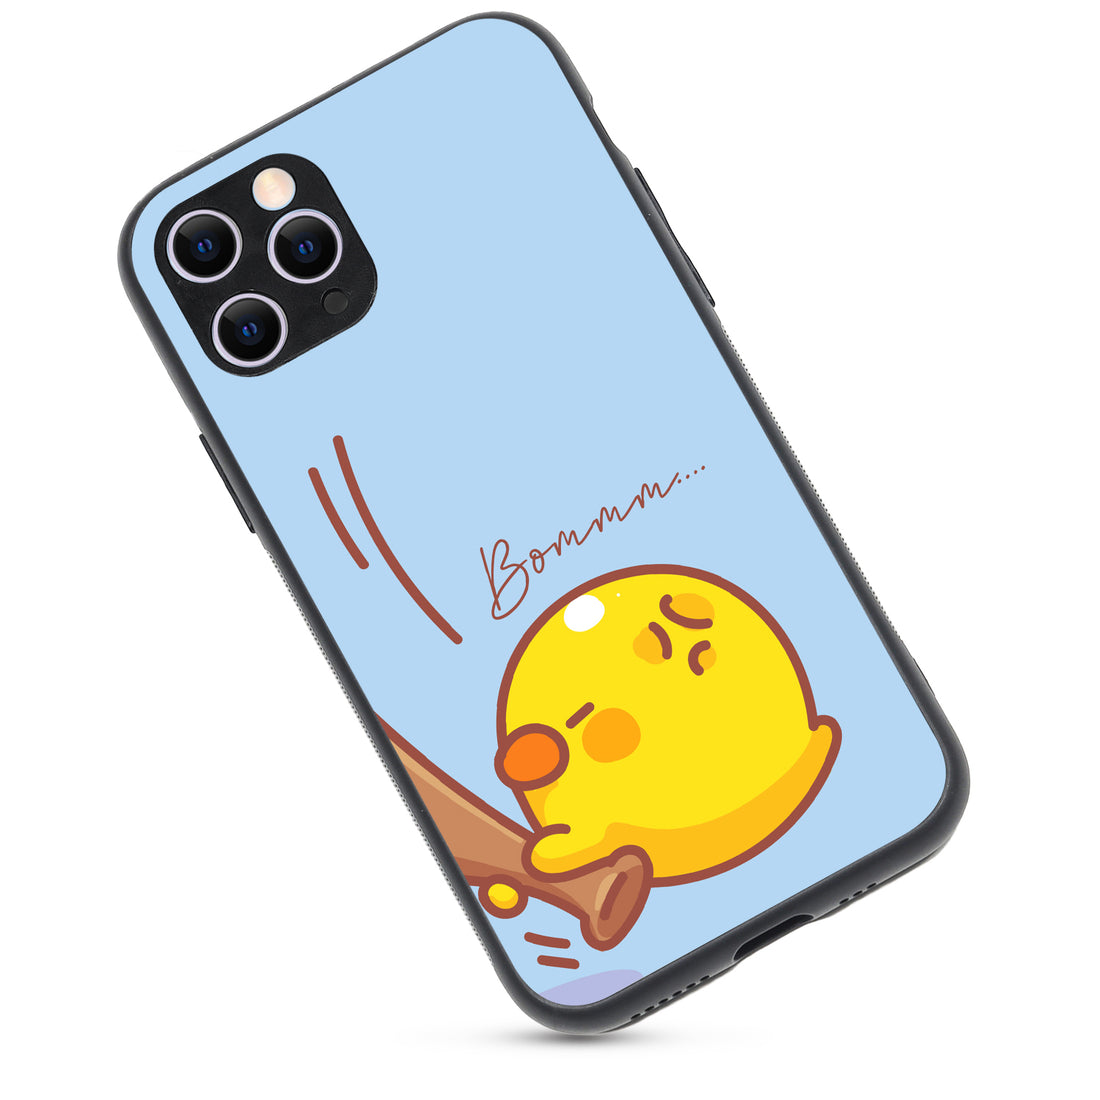 Bomm Cute Bff iPhone 11 Pro Case